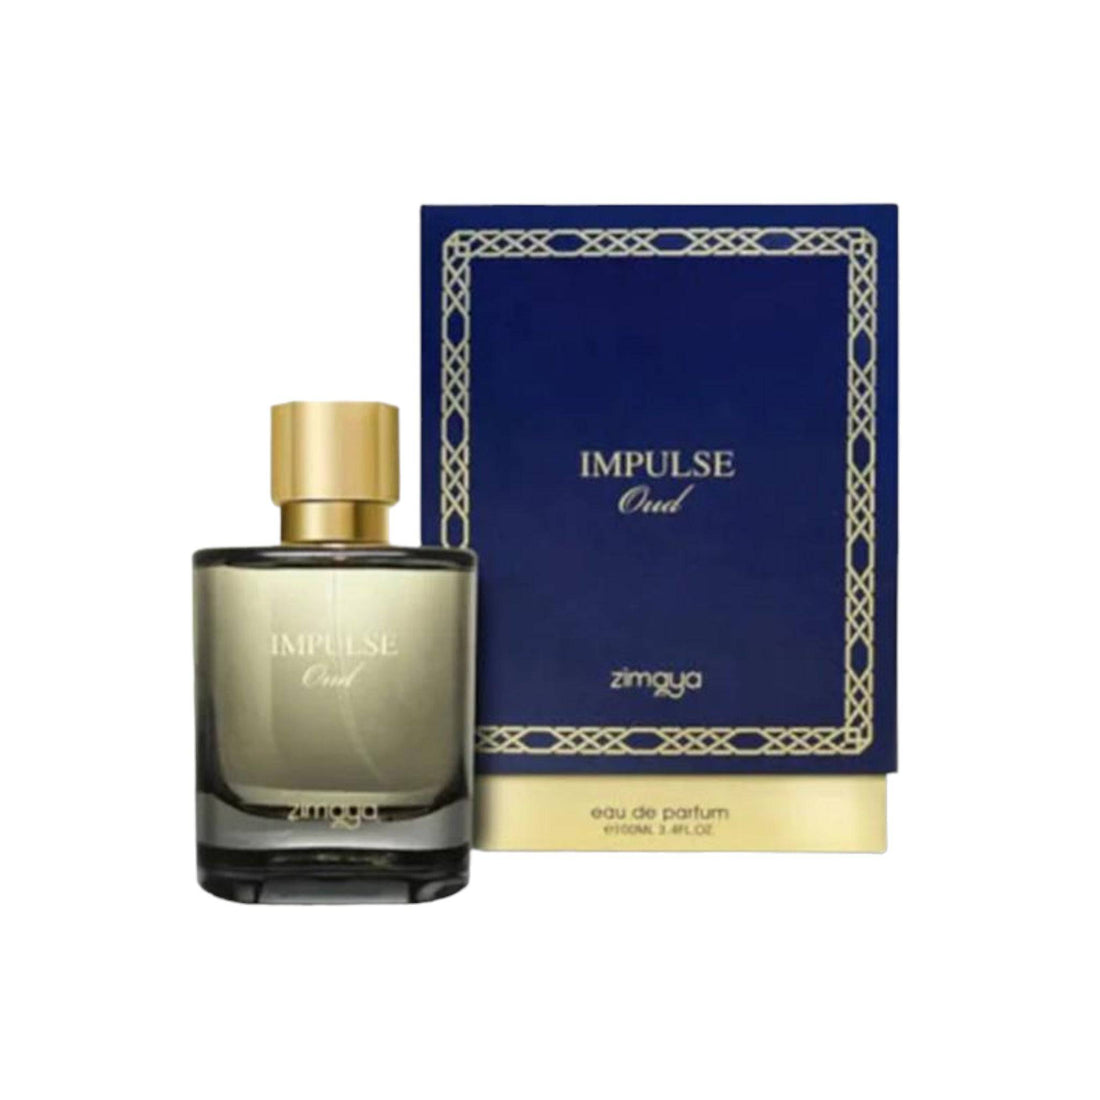 Luxurious 100ml bottle of Zimaya Impulse Oud Eau De Parfum, highlighting its opulent and sophisticated design.